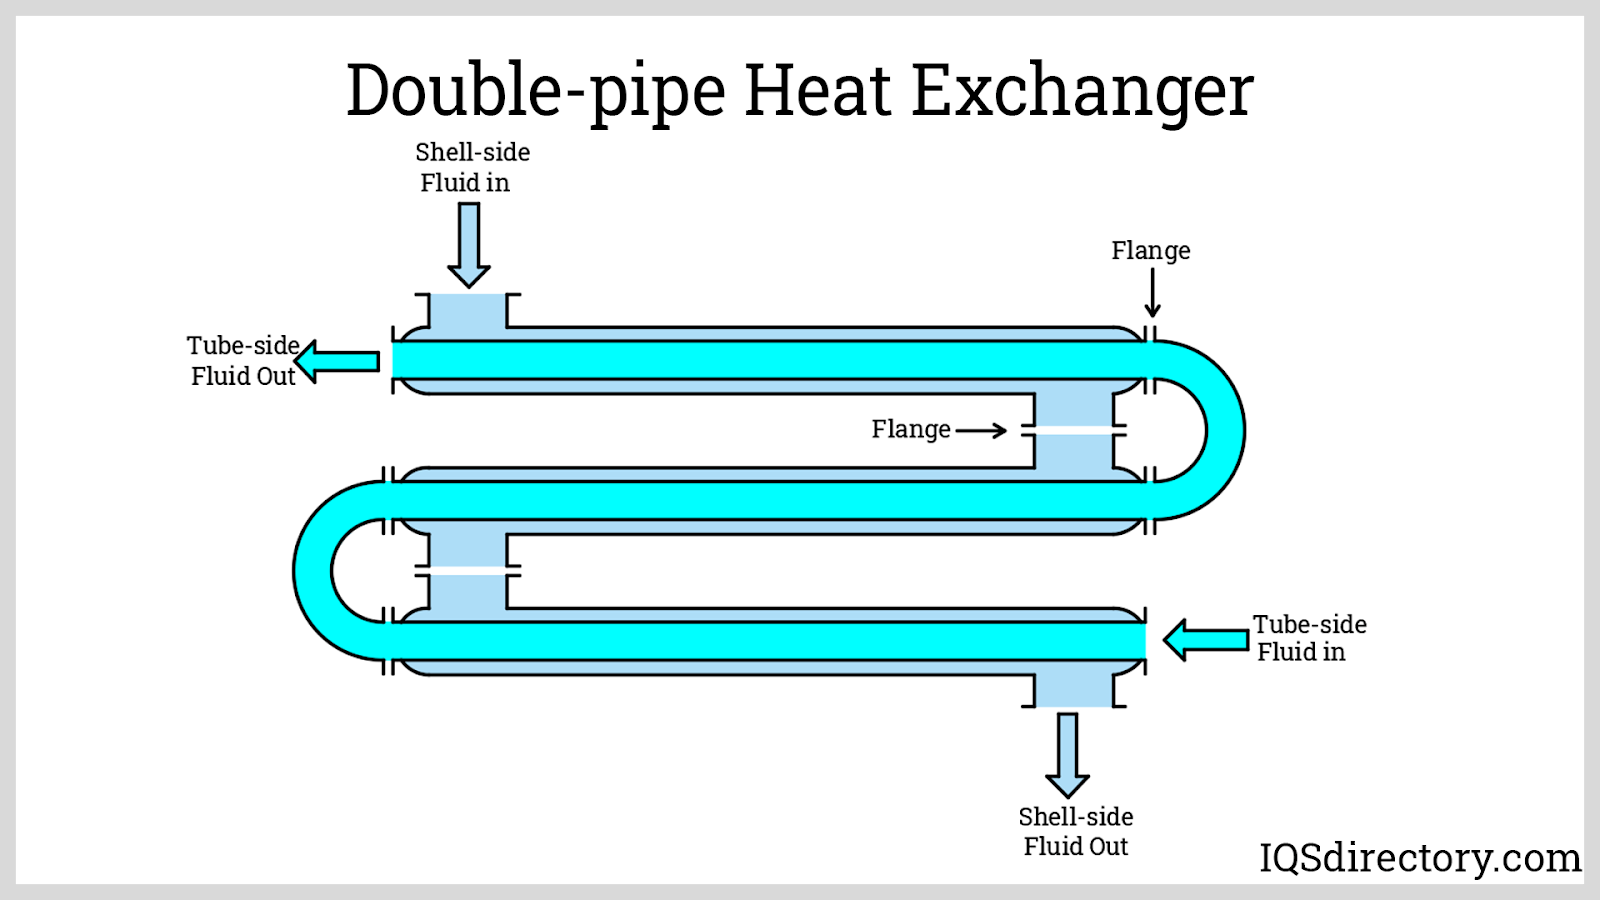 Heat recovery steam generator фото 89